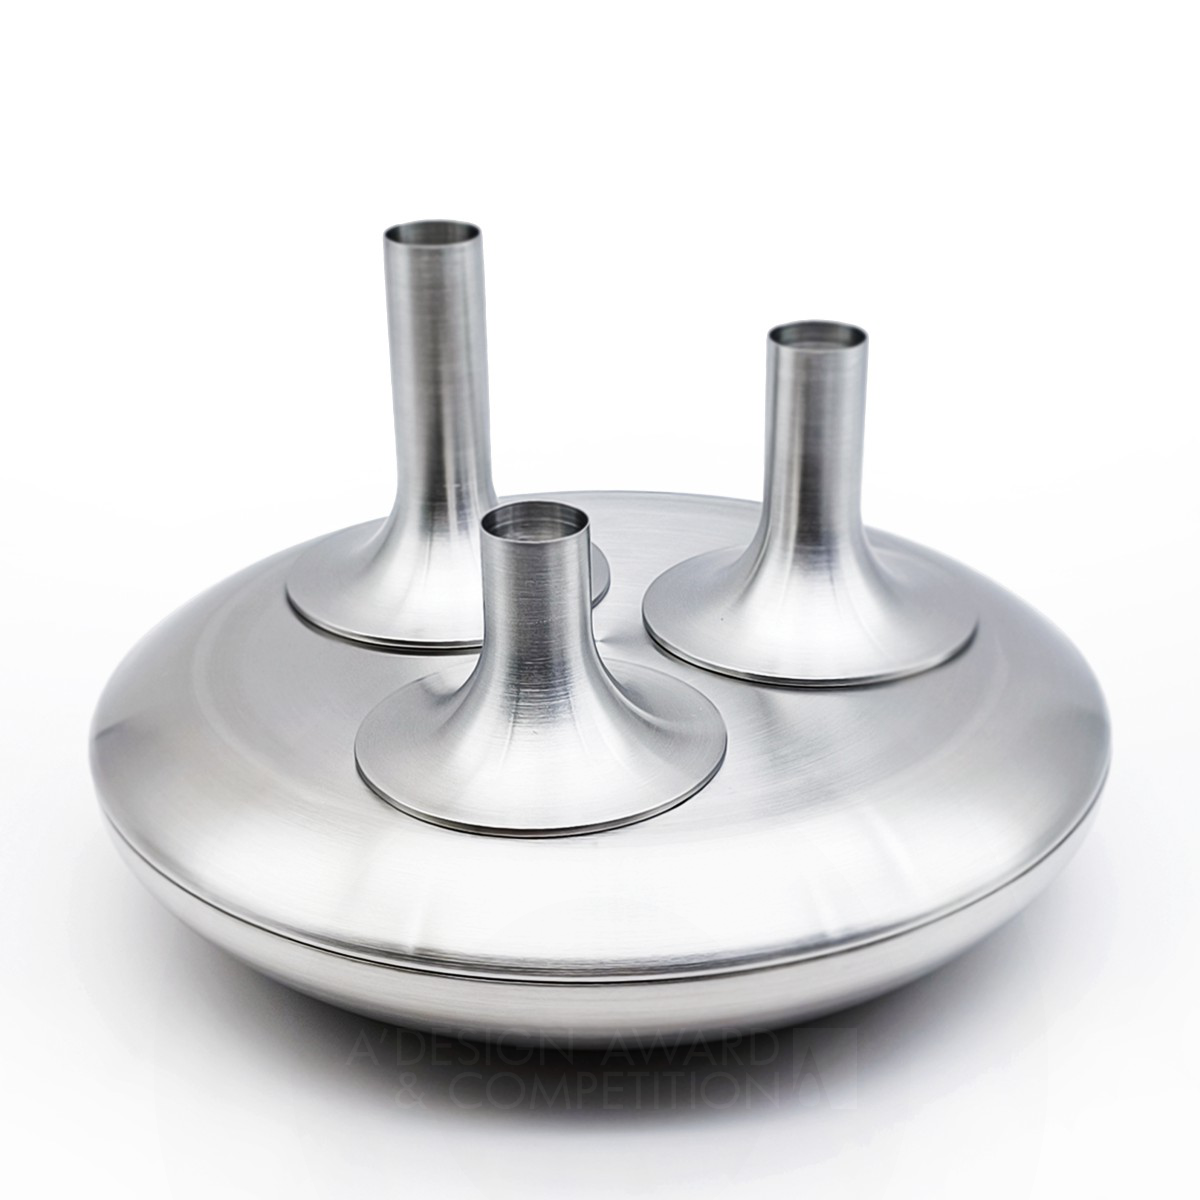  Stainless Steel Candleholder Set